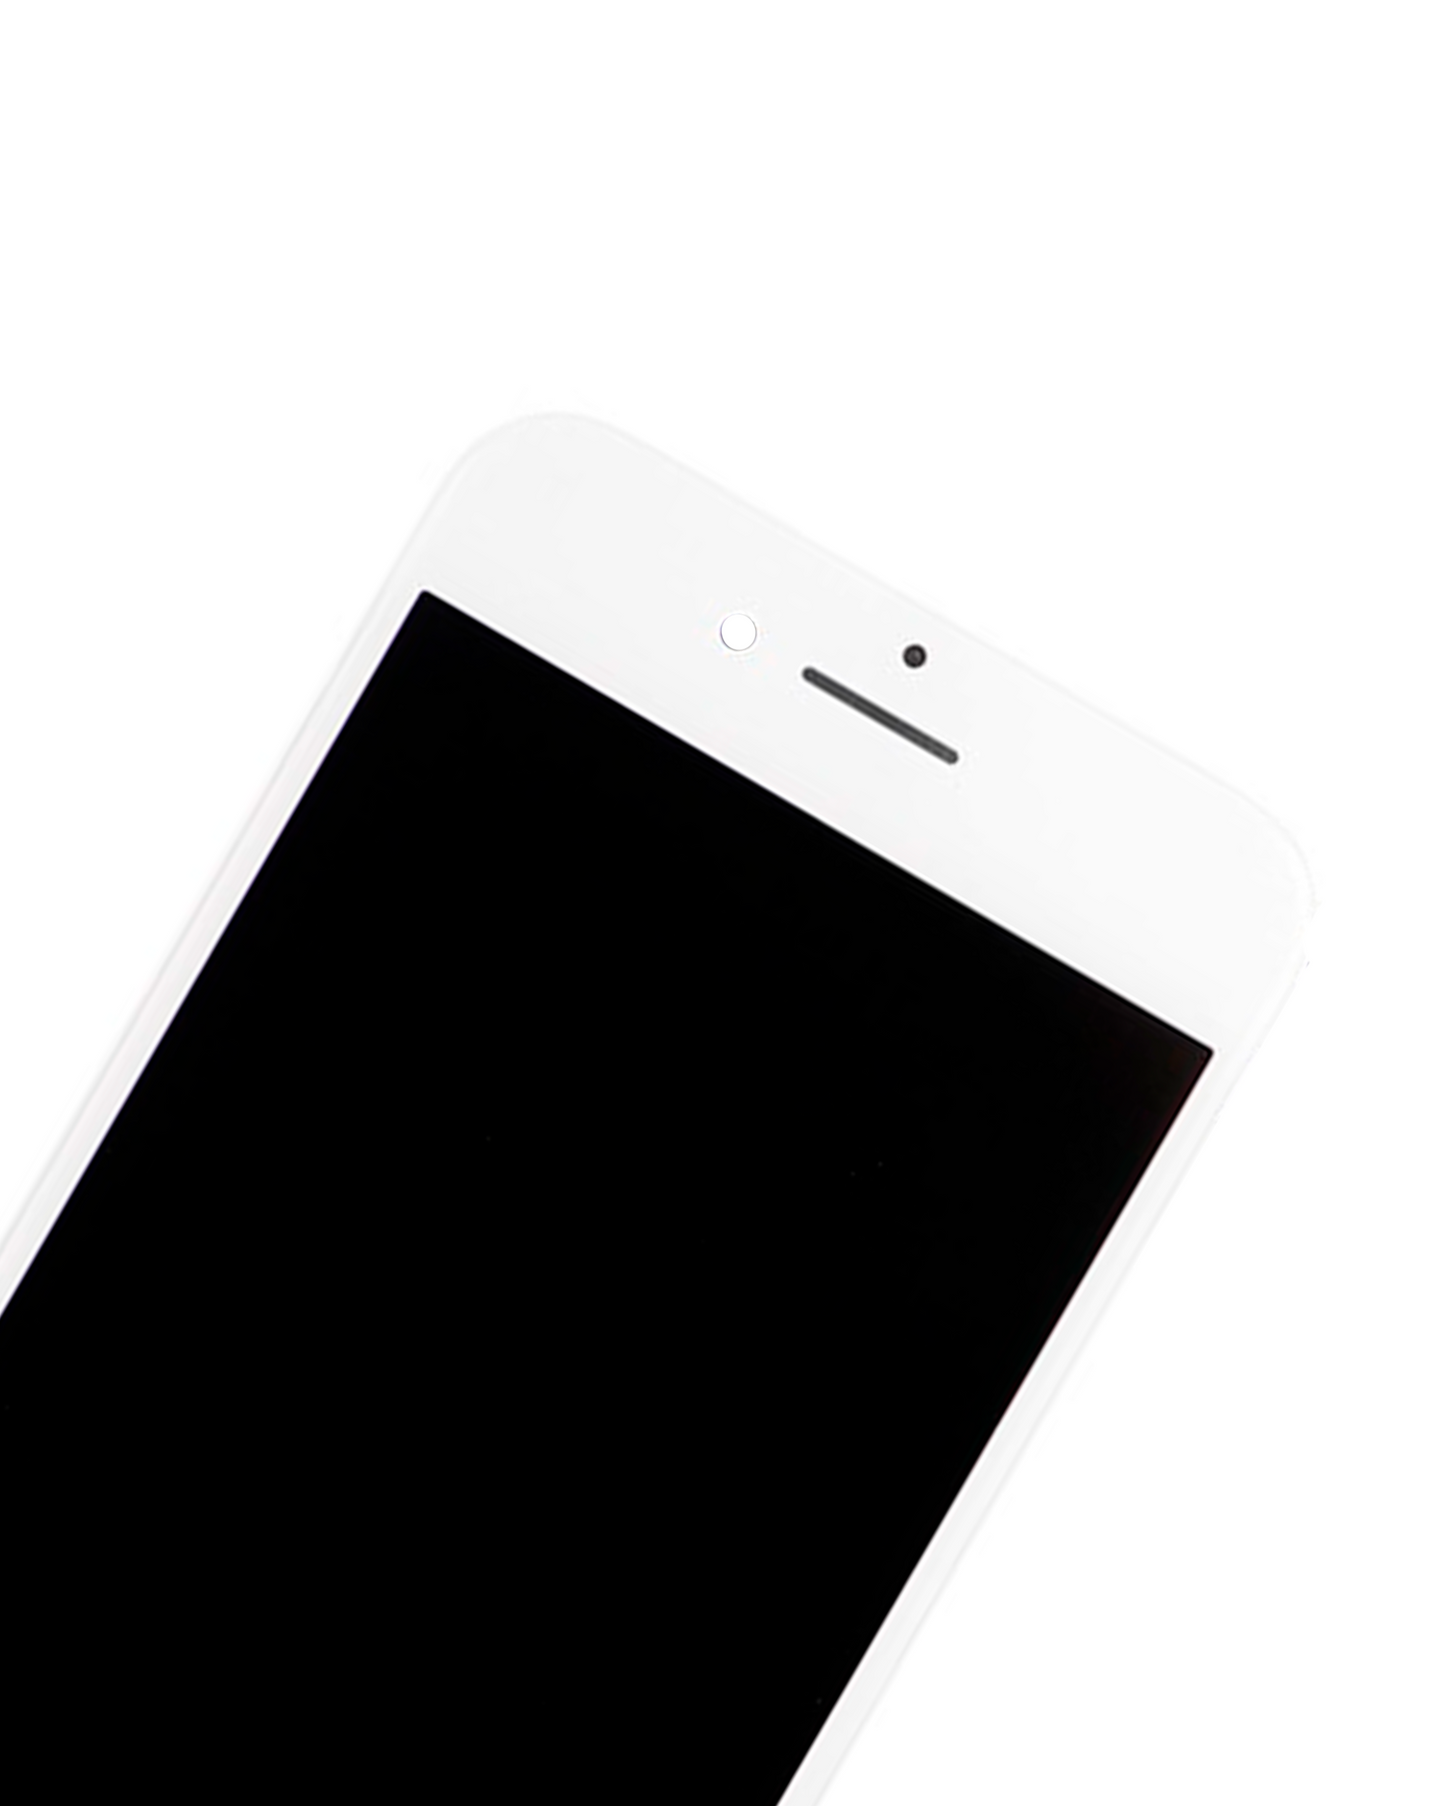 Display AM iPhone 7 (Blanco)